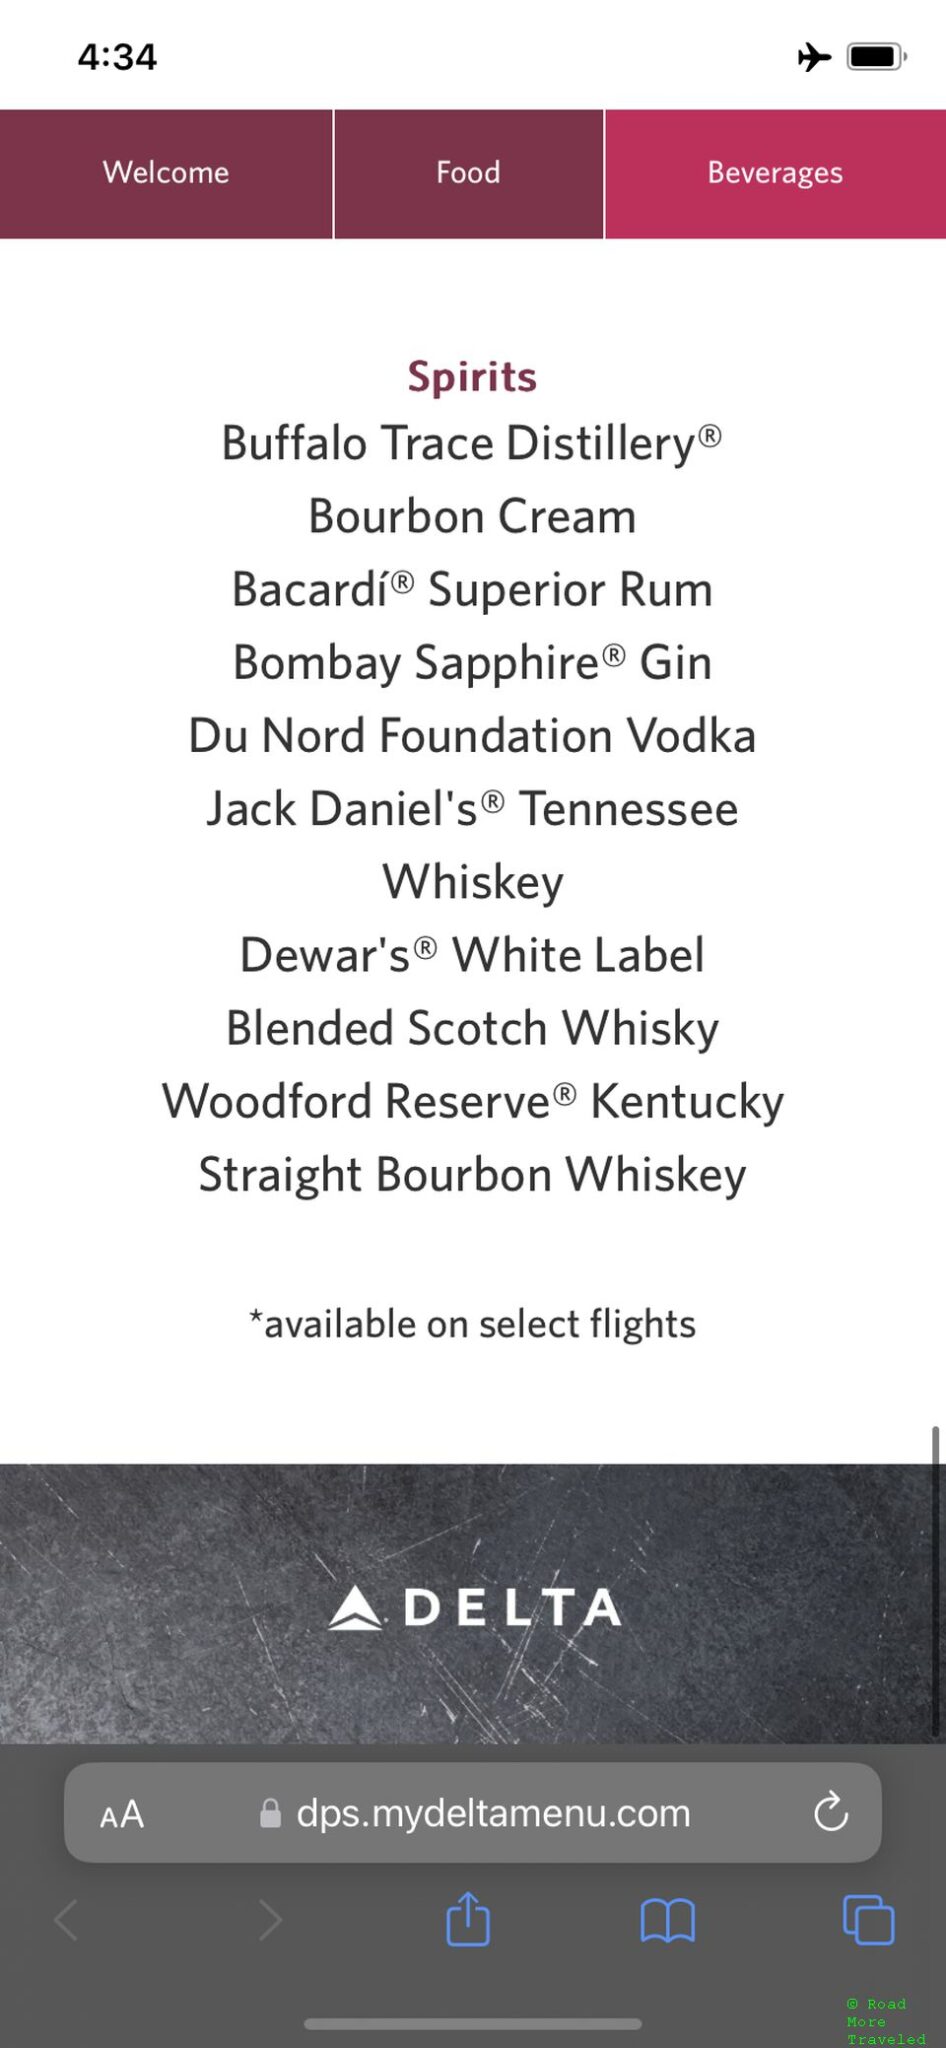 Delta Premium Select - spirits